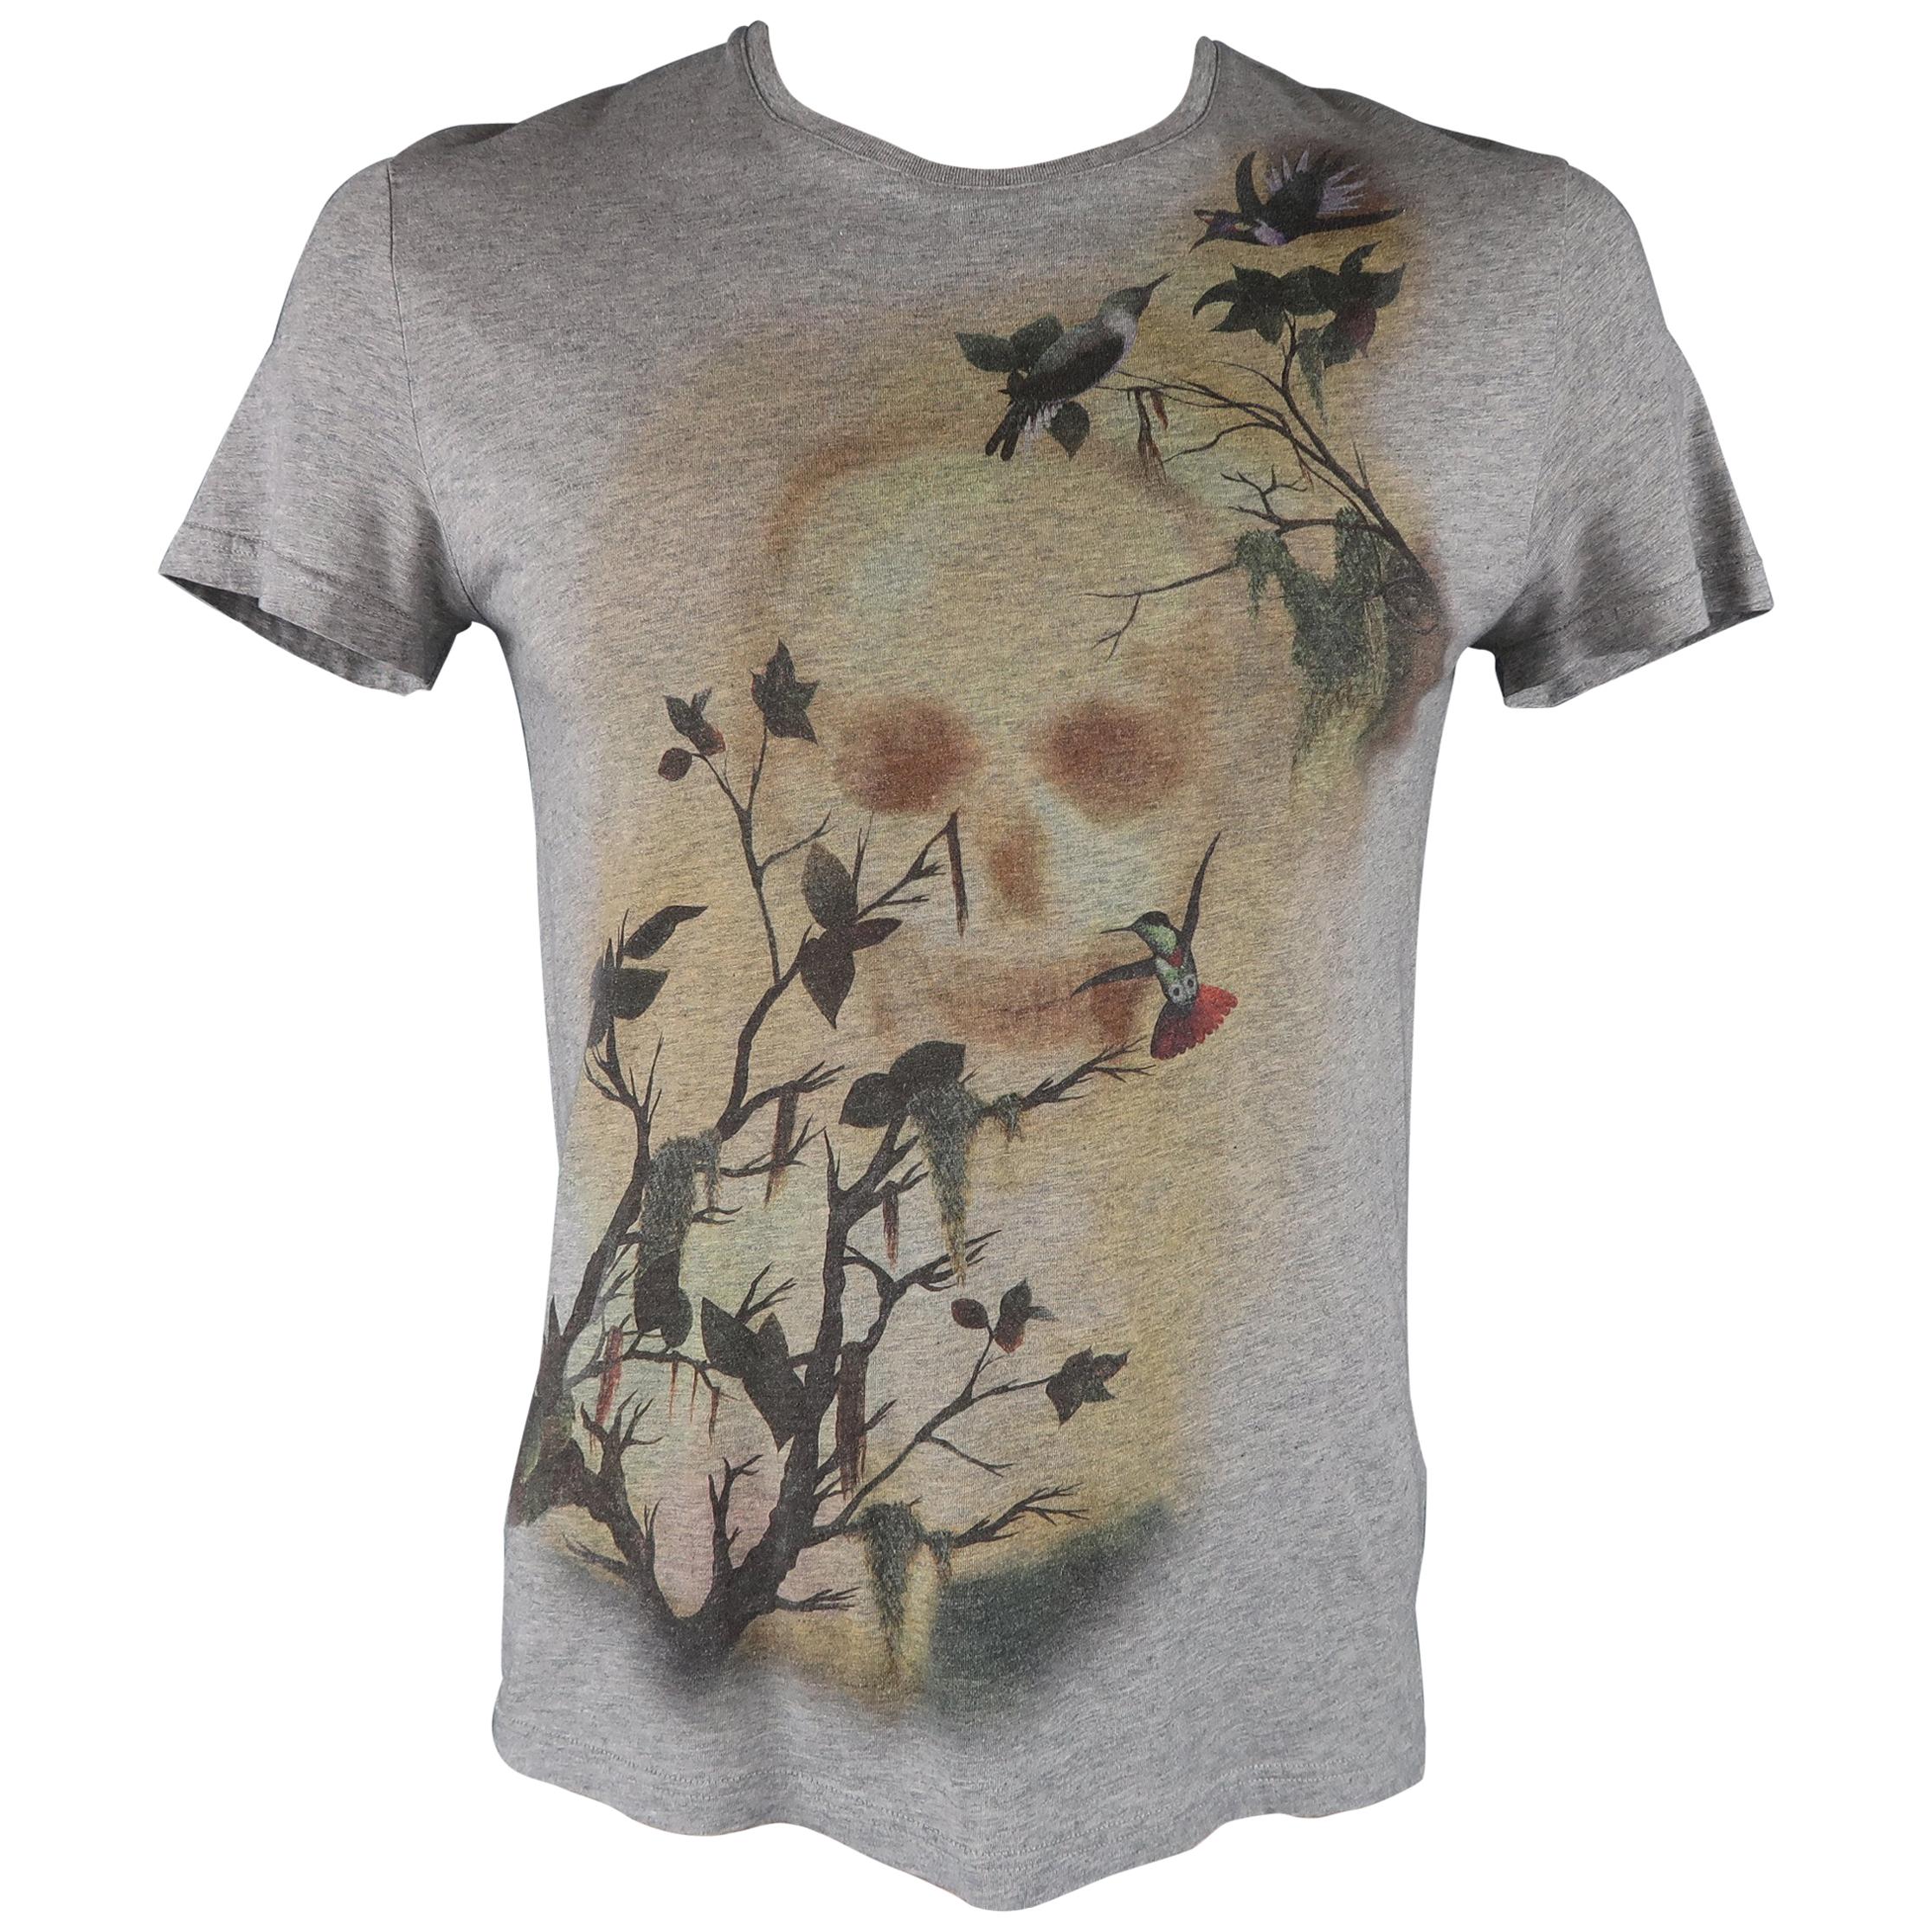 ALEXANDER MCQUEEN Size L Heather Grey Skull & Birds Graphic Cotton T-shirt Tee